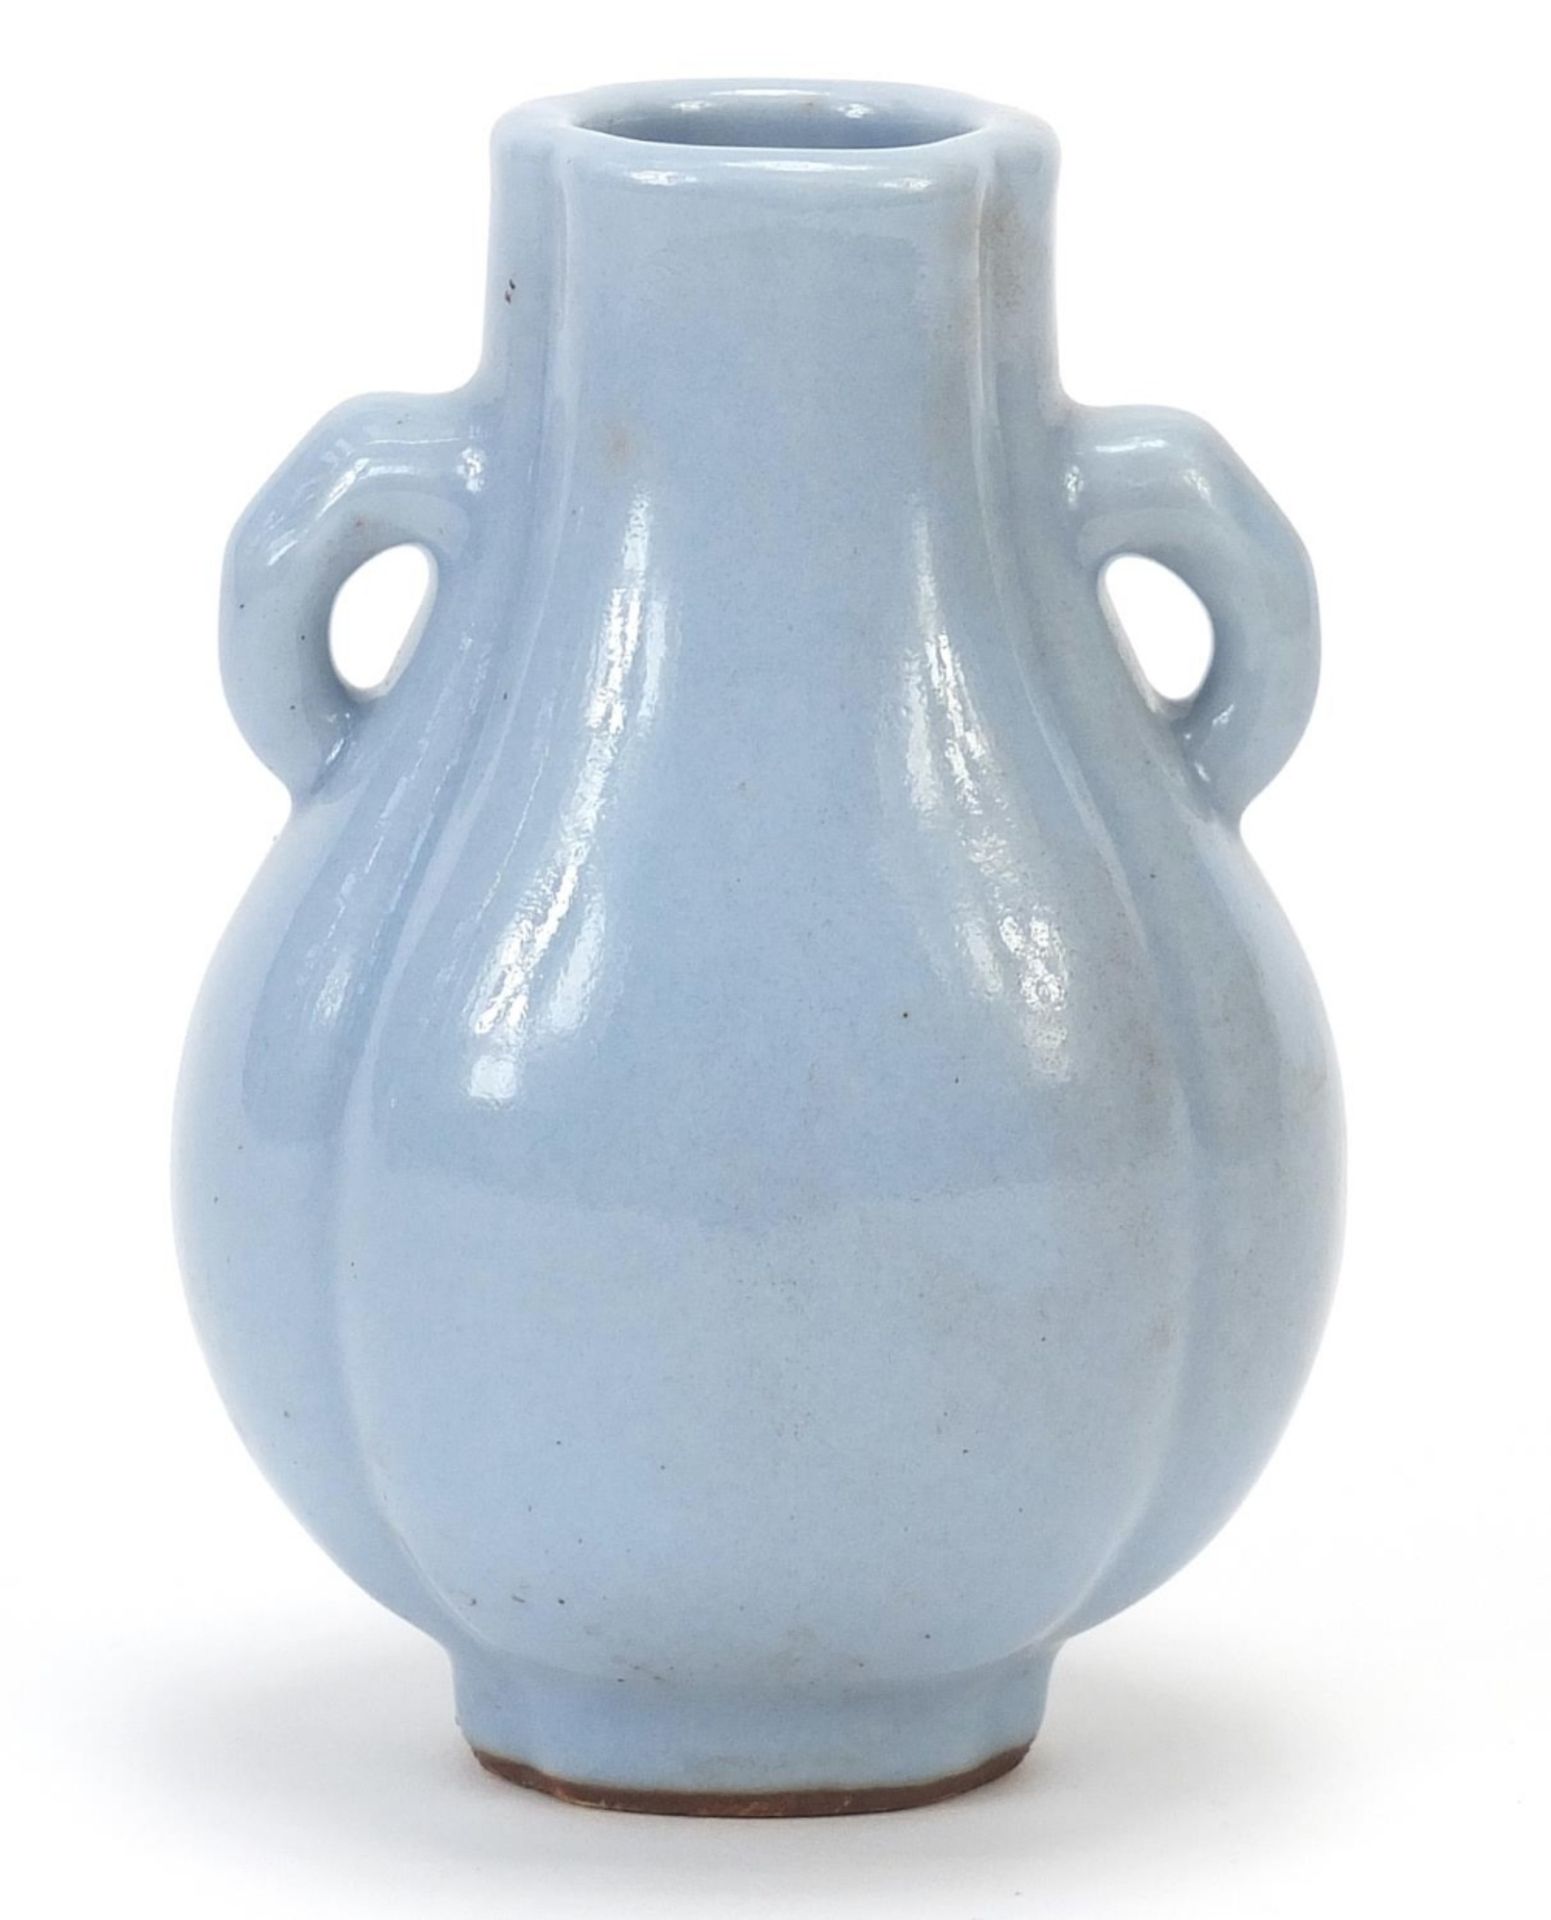 Chinese porcelain quatrefoil vase with ears having a clair de lune type glaze, 10cm high :For